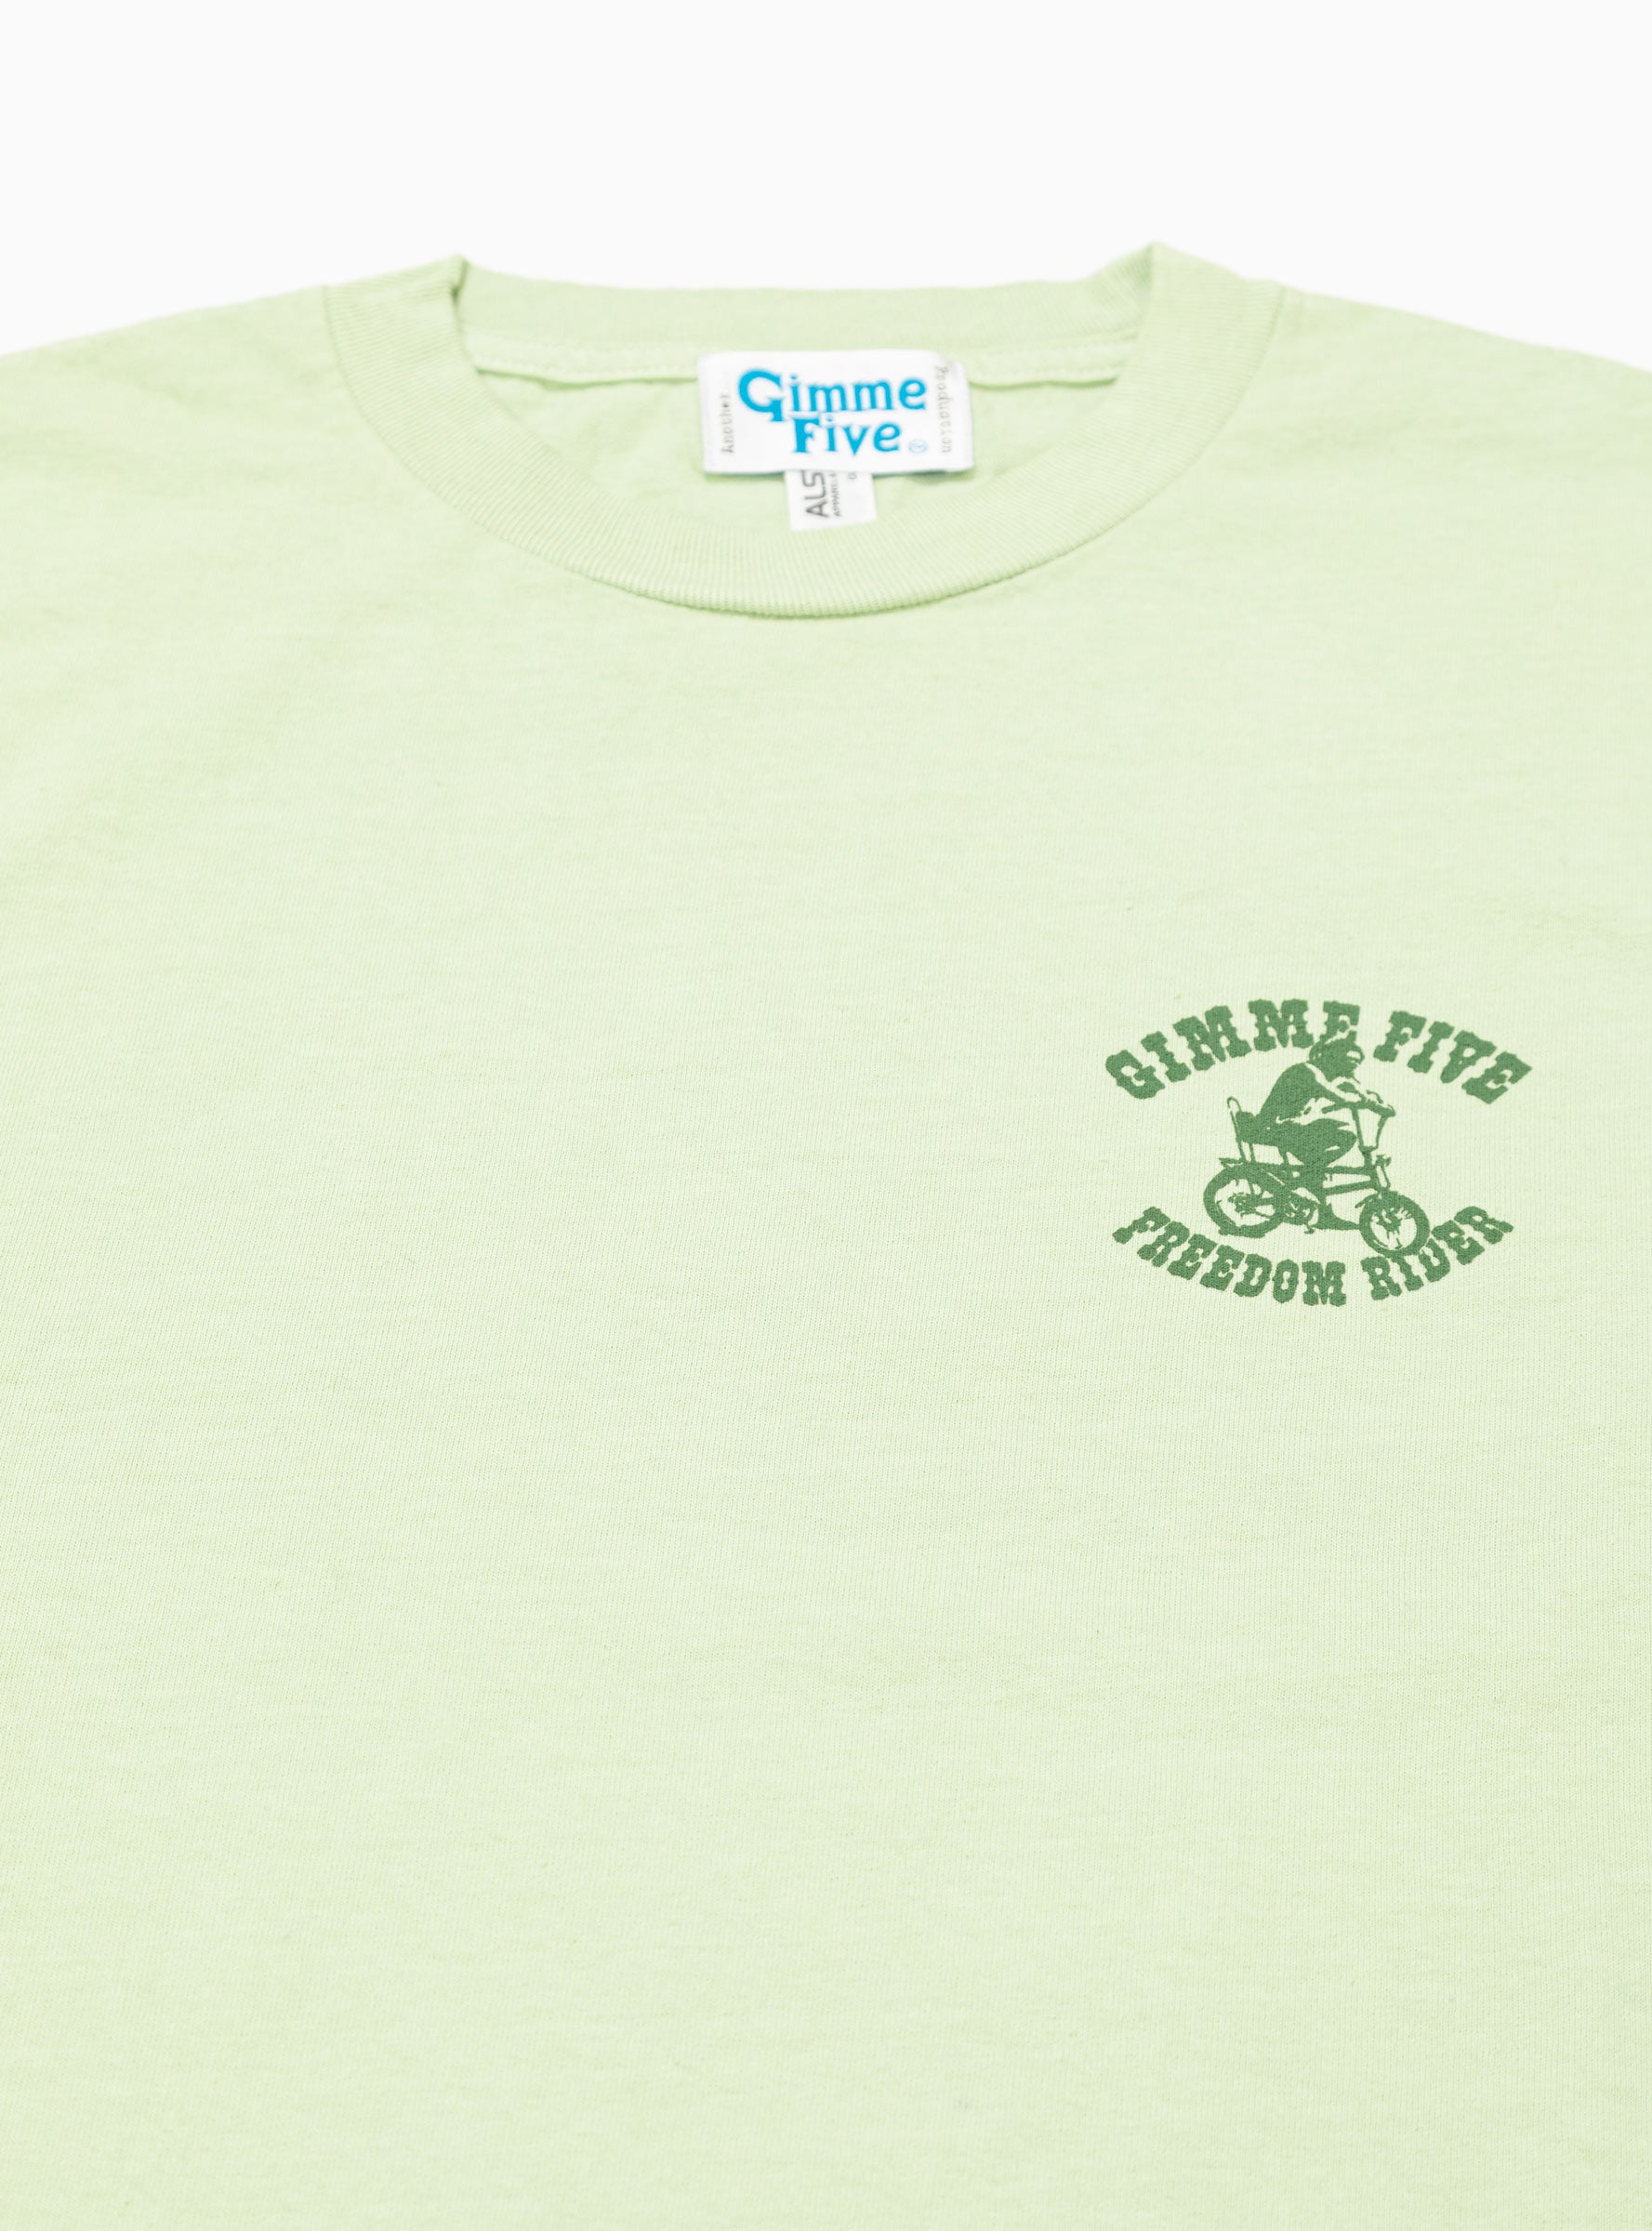  Gimme Five Freedom Rider T-shirt Light Green - Size: Medium